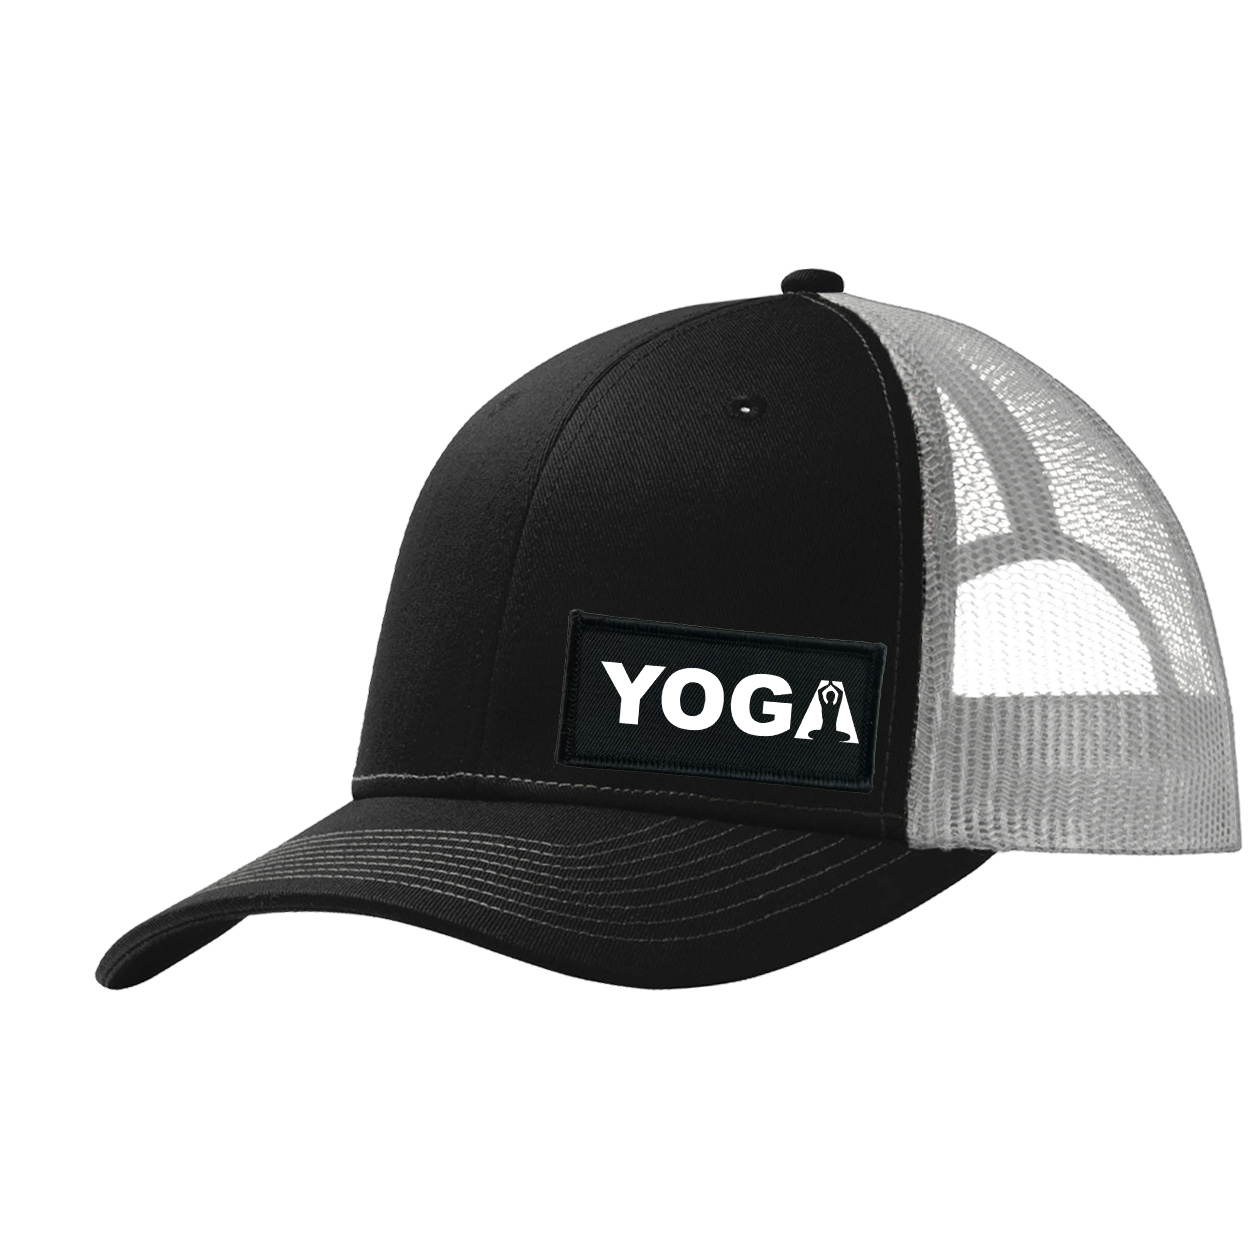 Yoga Meditation Logo Night Out Woven Patch Snapback Trucker Hat Black/Gray